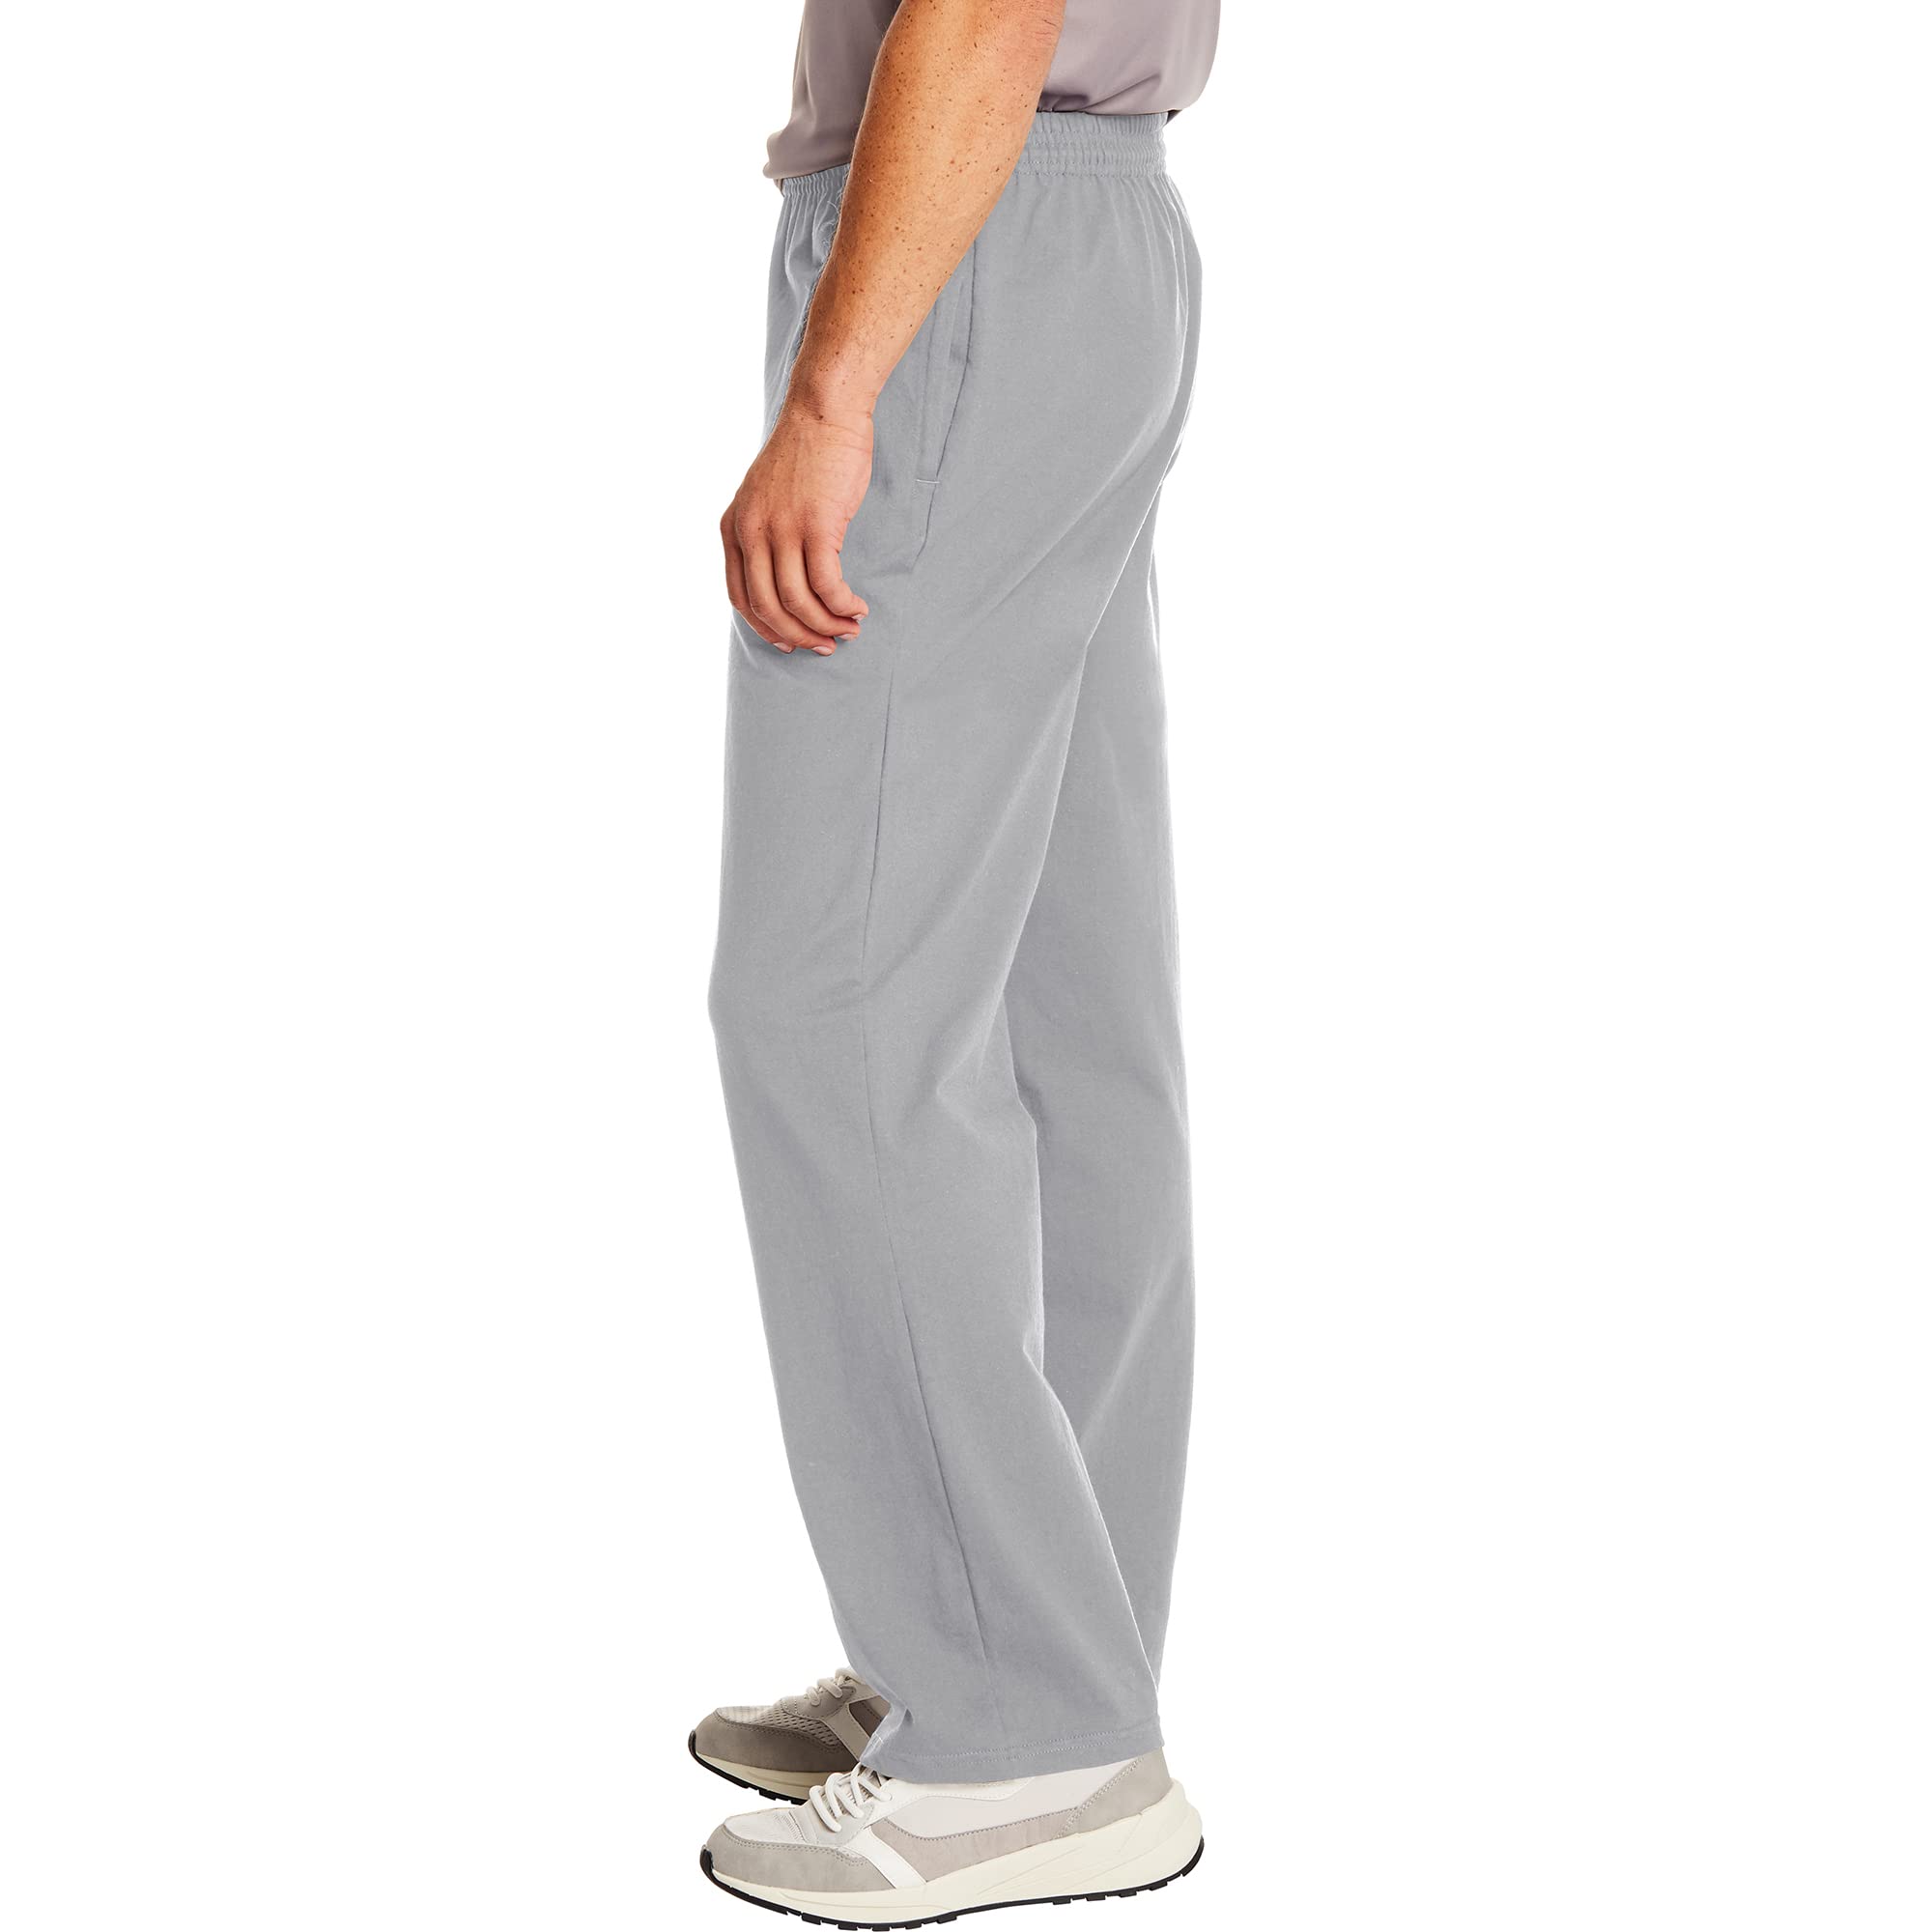 Hanes Men's X-Temp Jersey Pocket Pant